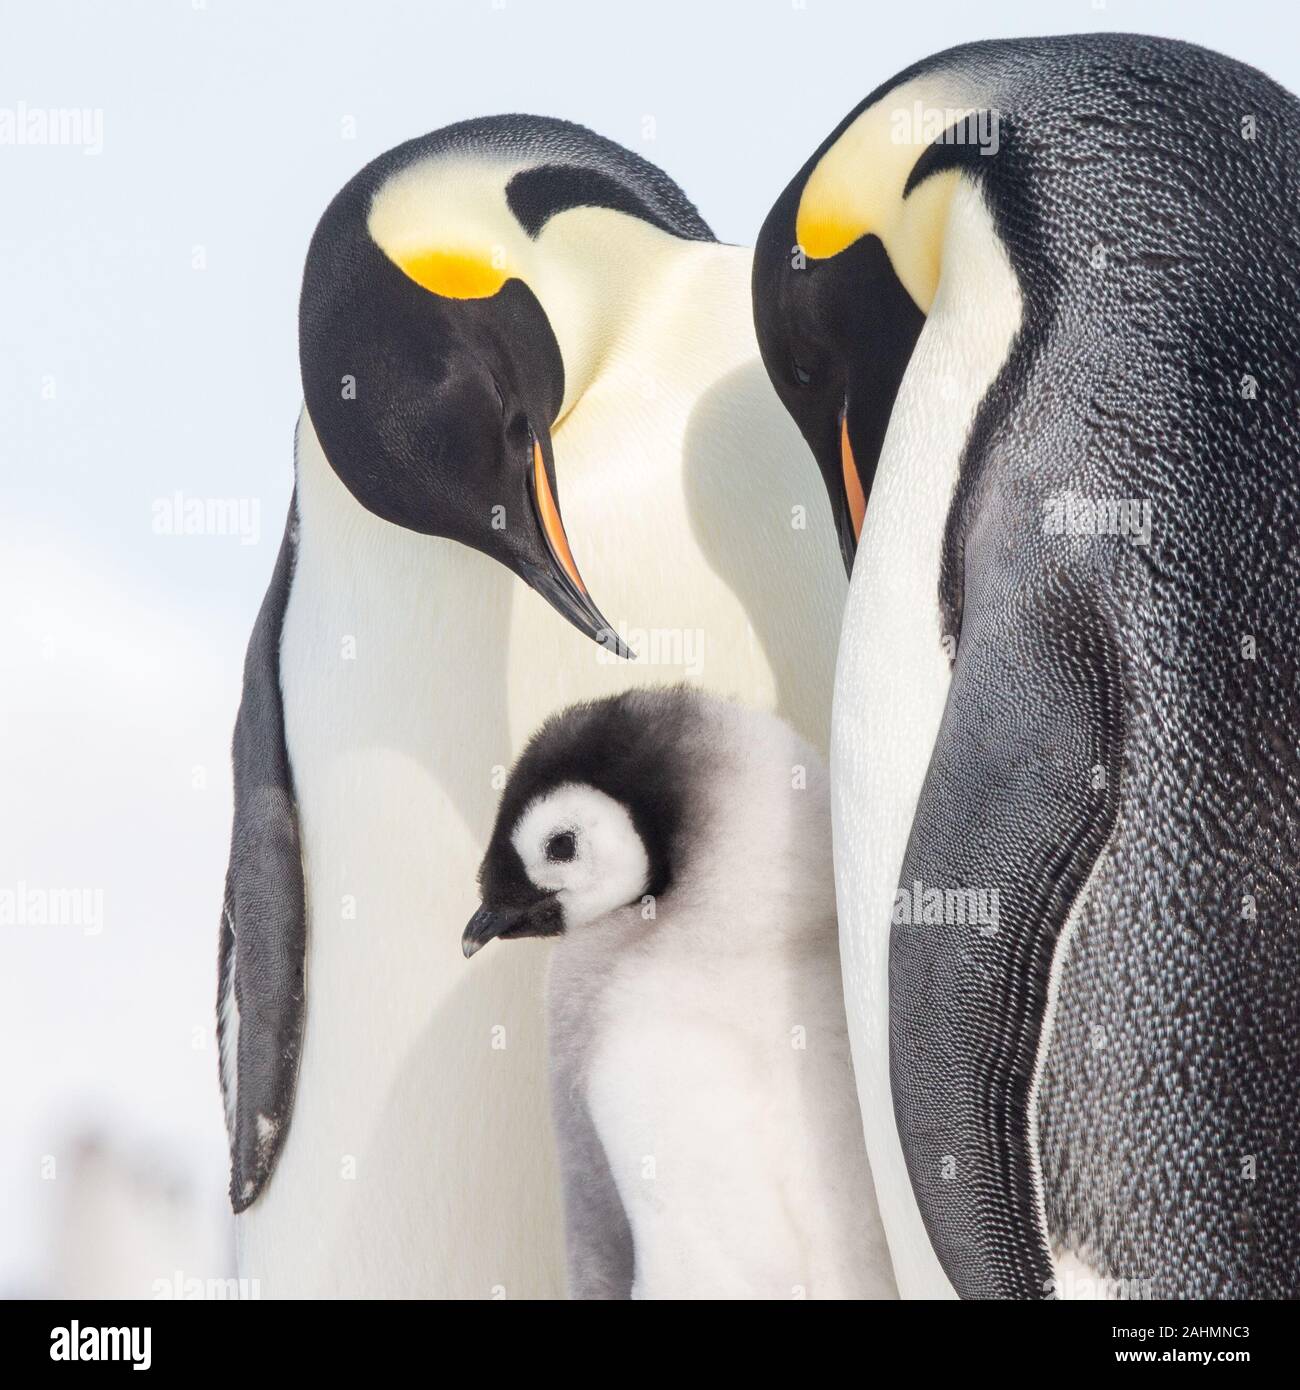 Emperor penguins at snow hill, Antarctica Stock Photo